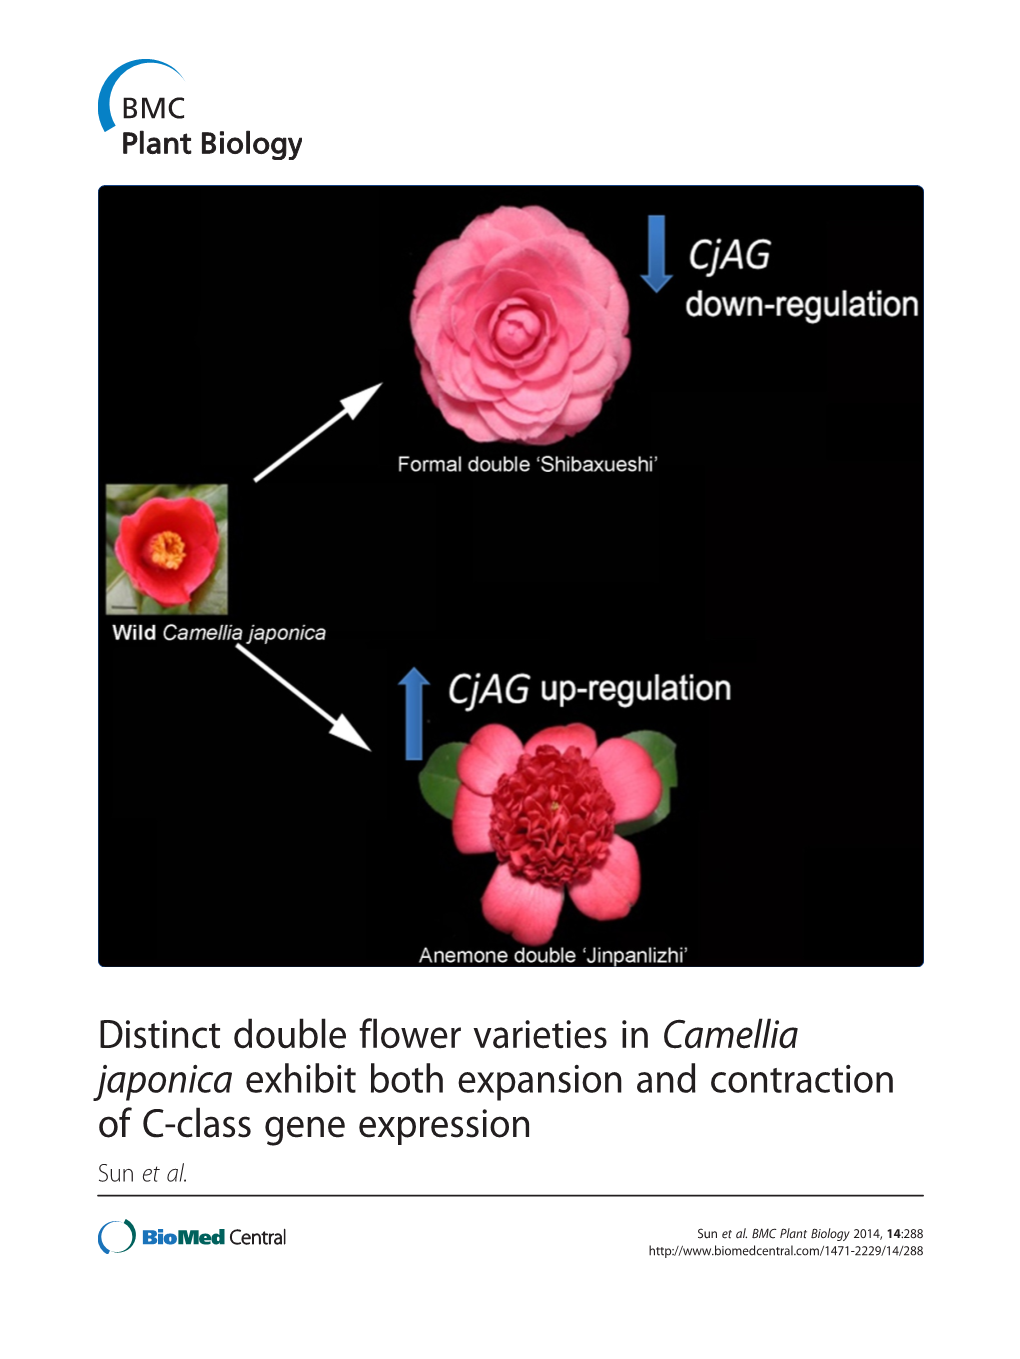 Distinct Double Flower Varieties in Camellia Japonica Exhibit Both Expansion and Contraction of C-Class Gene Expression Sun Et Al